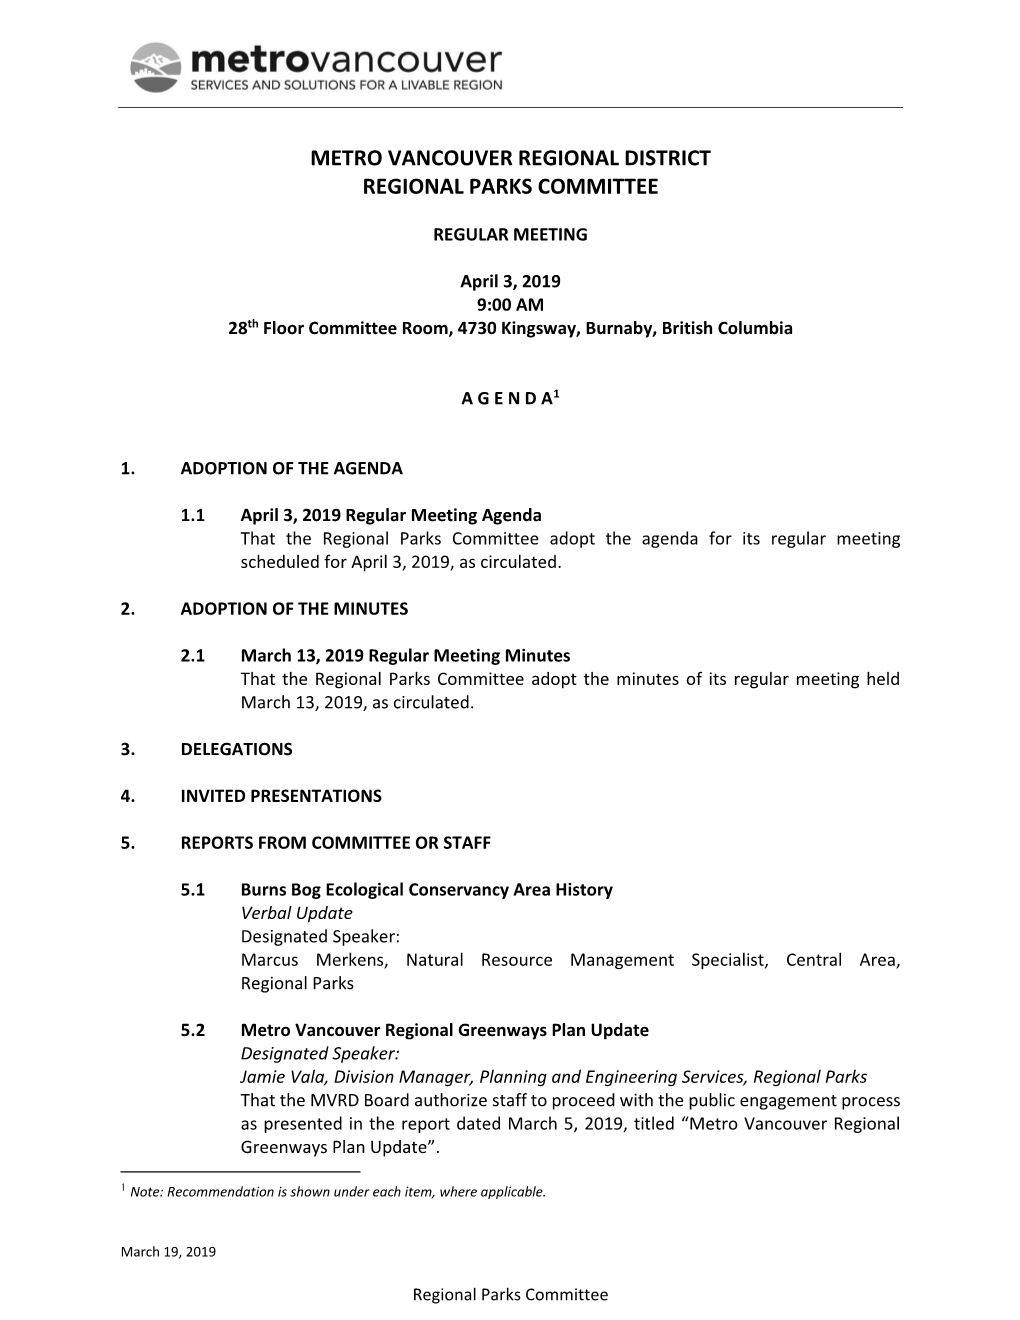 Regional Parks Committee Agenda April 3, 2019